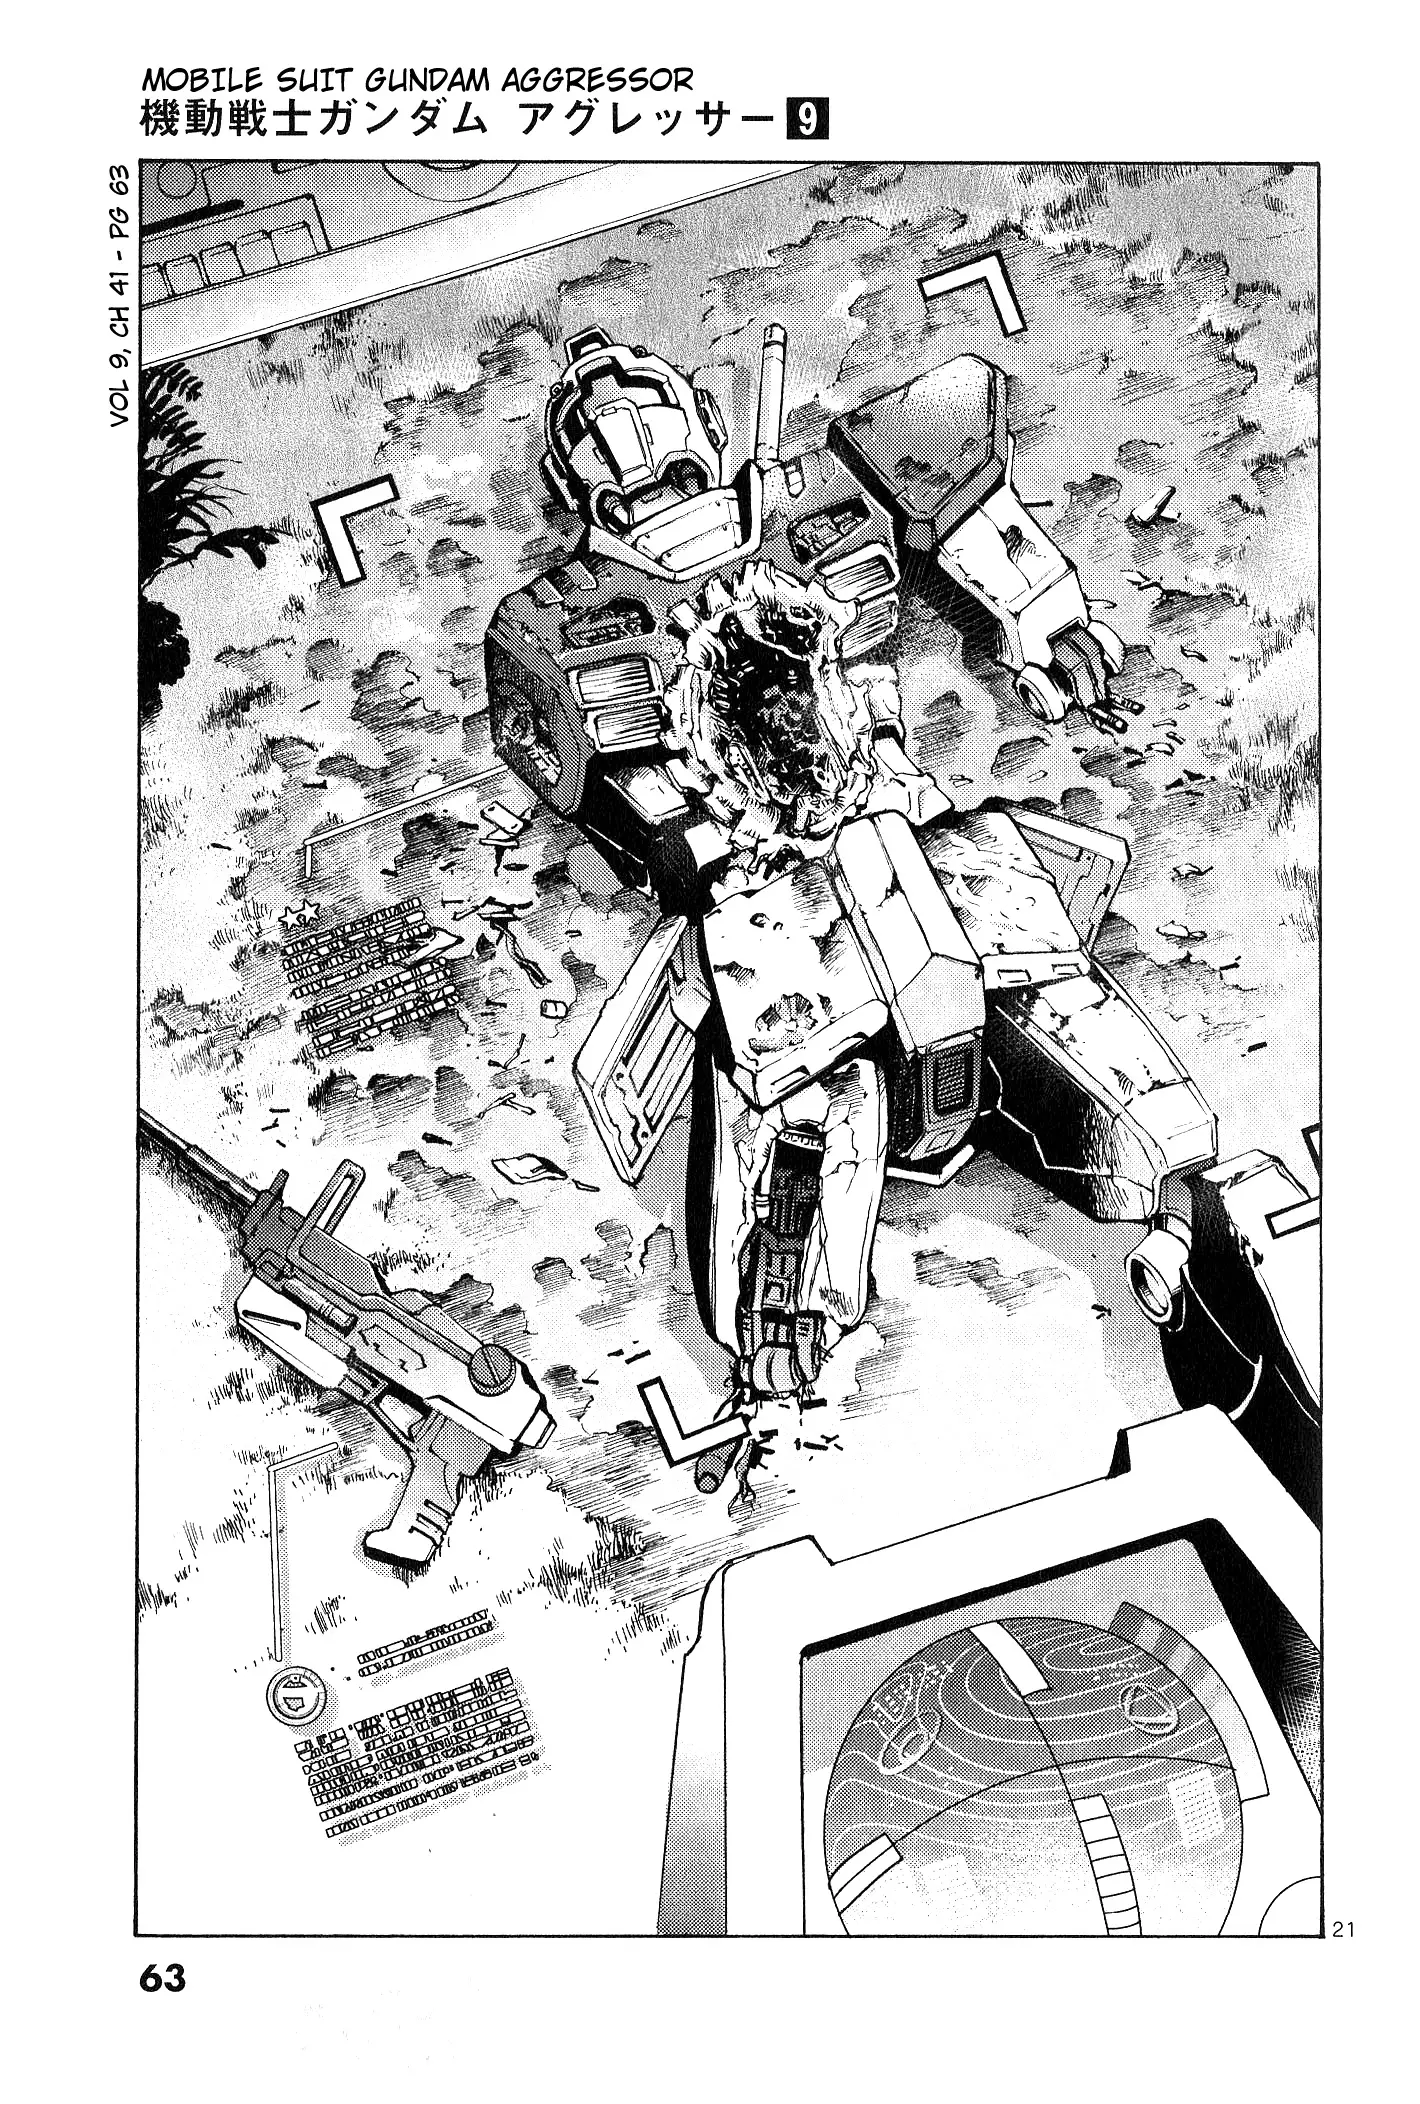 Mobile Suit Gundam Aggressor - 41 page 22-4818237e